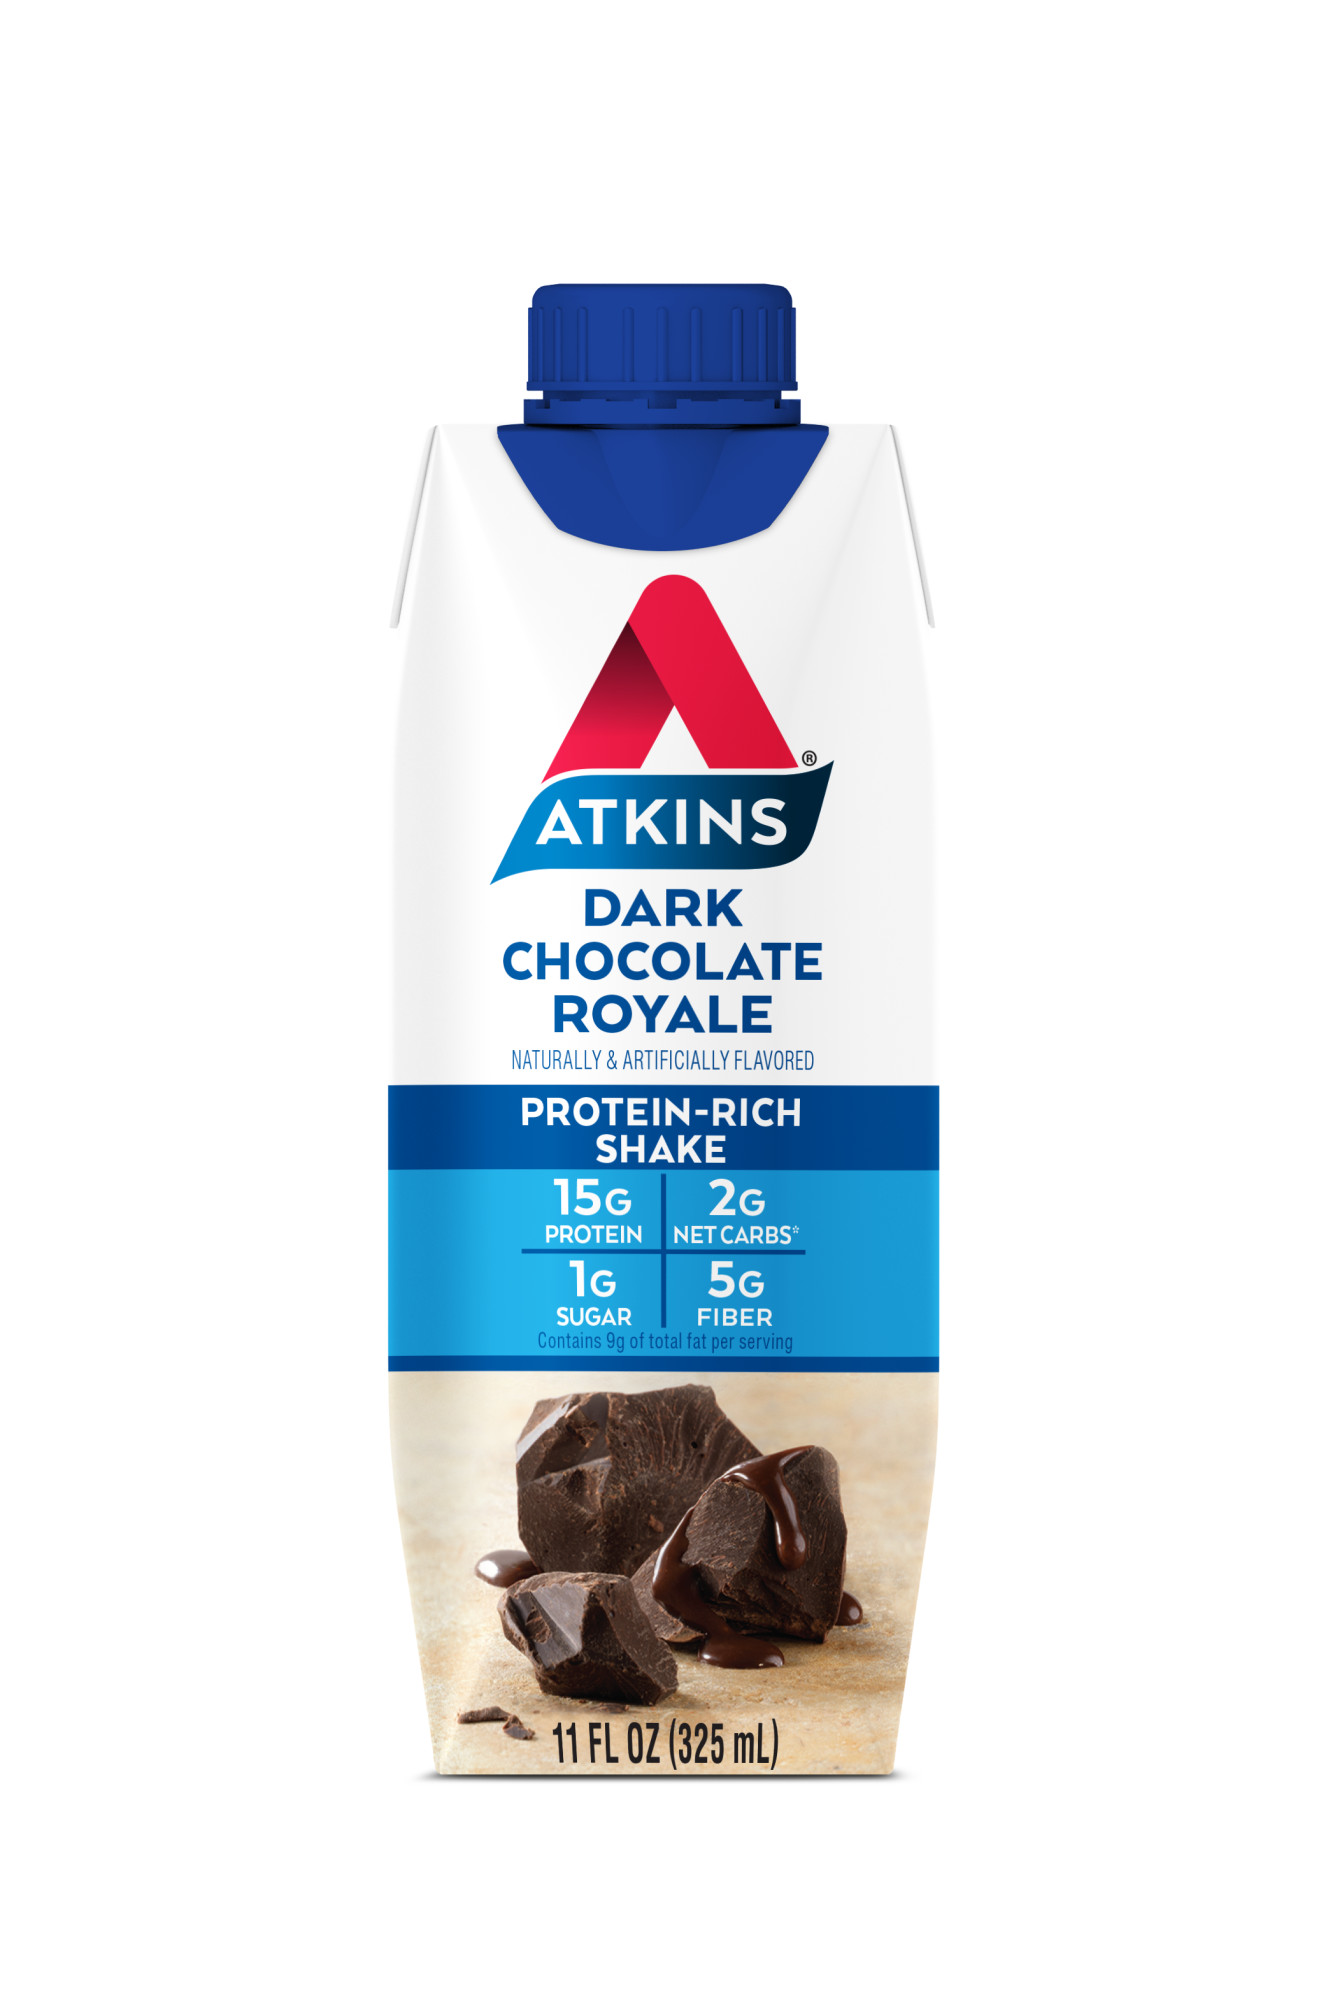 Atkins Dark Chocolate Royale Protein Shake, High Protein, Low Carb, Keto Friendly, Gluten Free, 11fl oz, 4 Ct - image 2 of 8